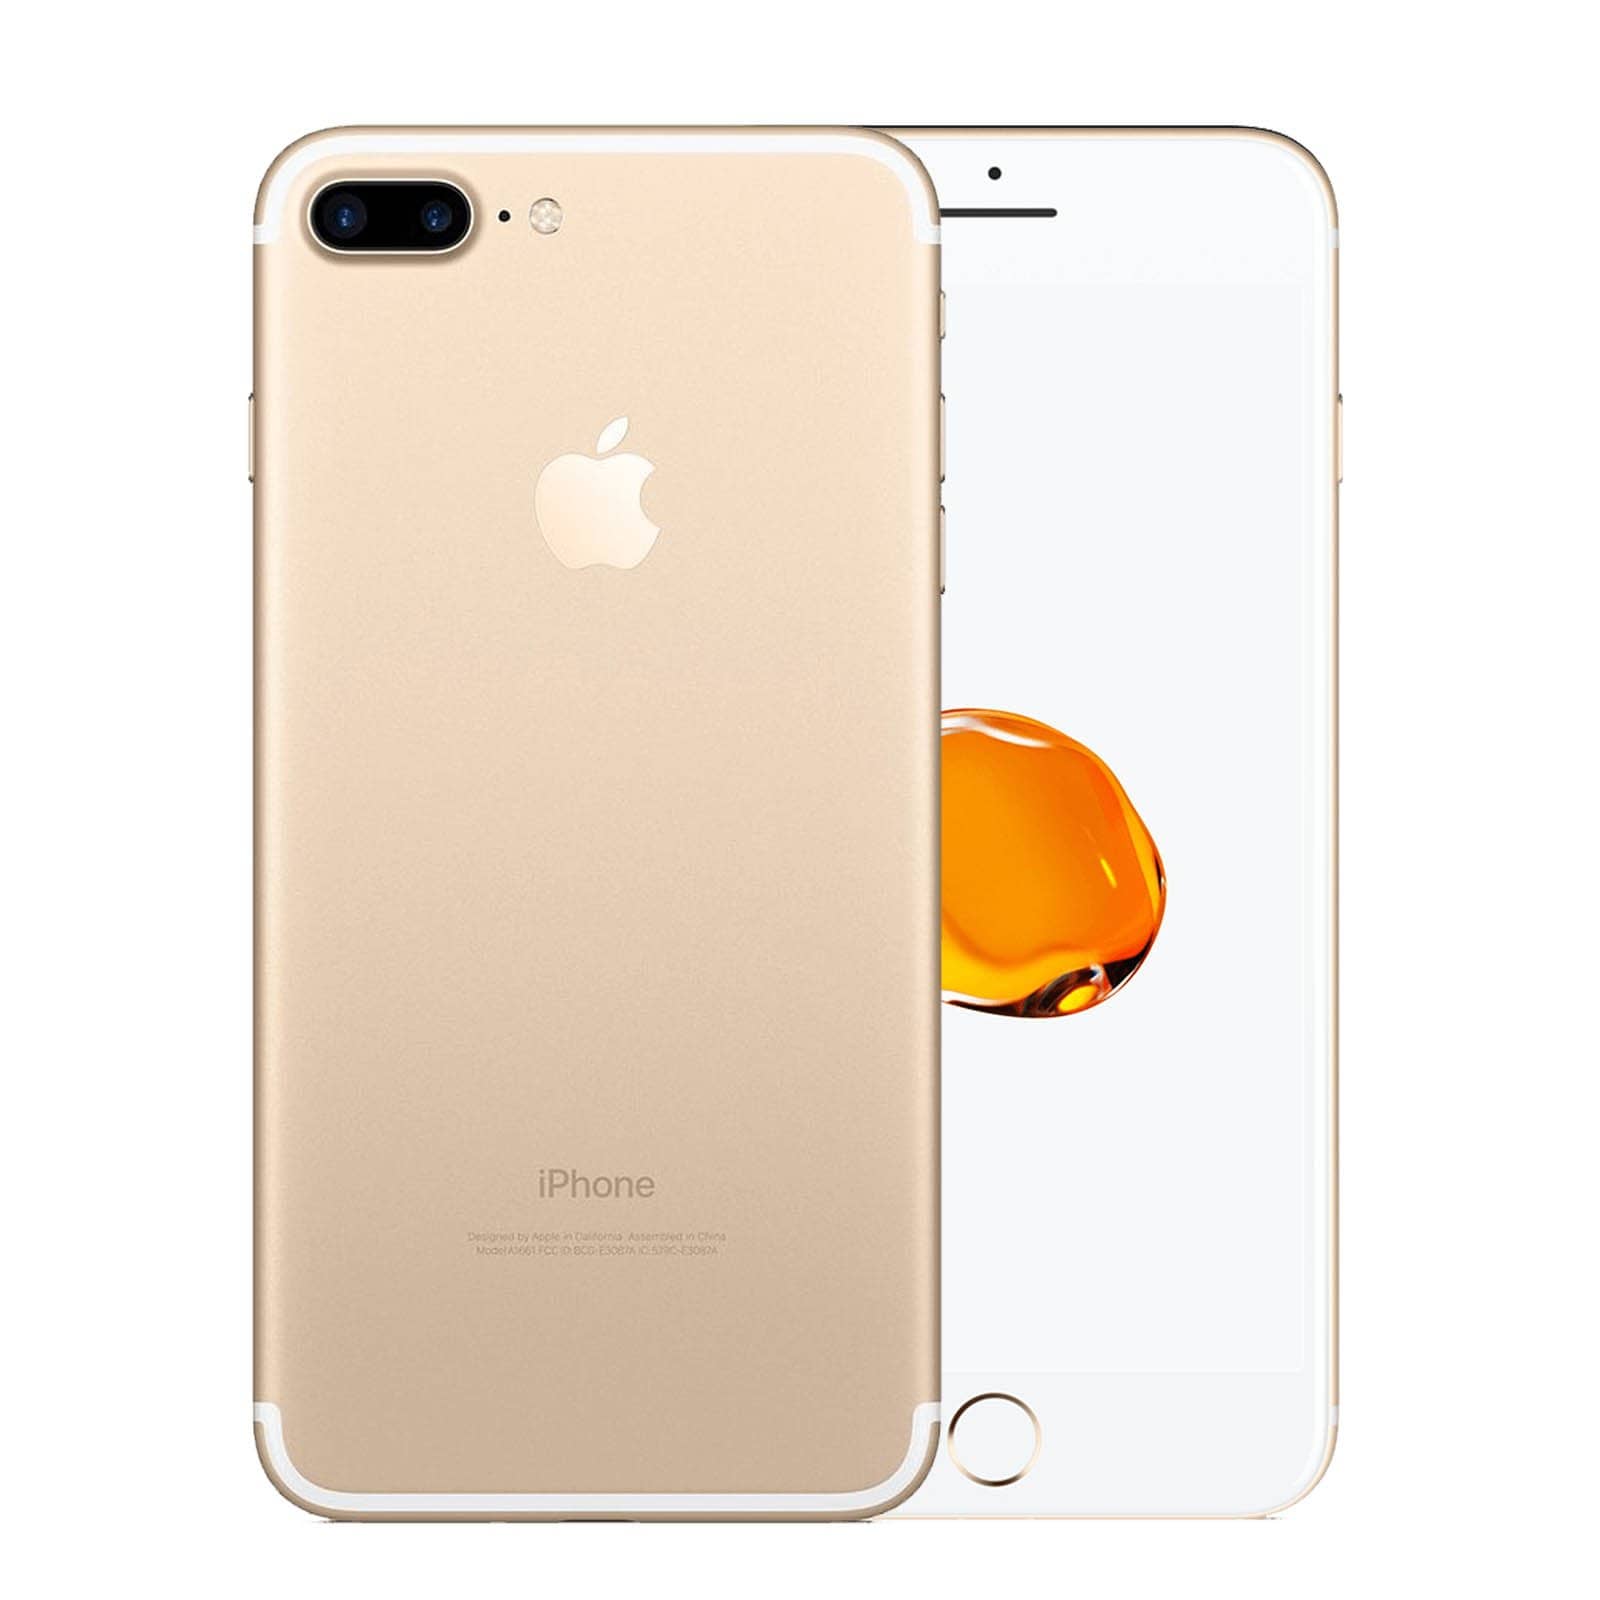 Apple iPhone 7 Plus 128GB Gold Fair - Unlocked 128GB Gold Fair